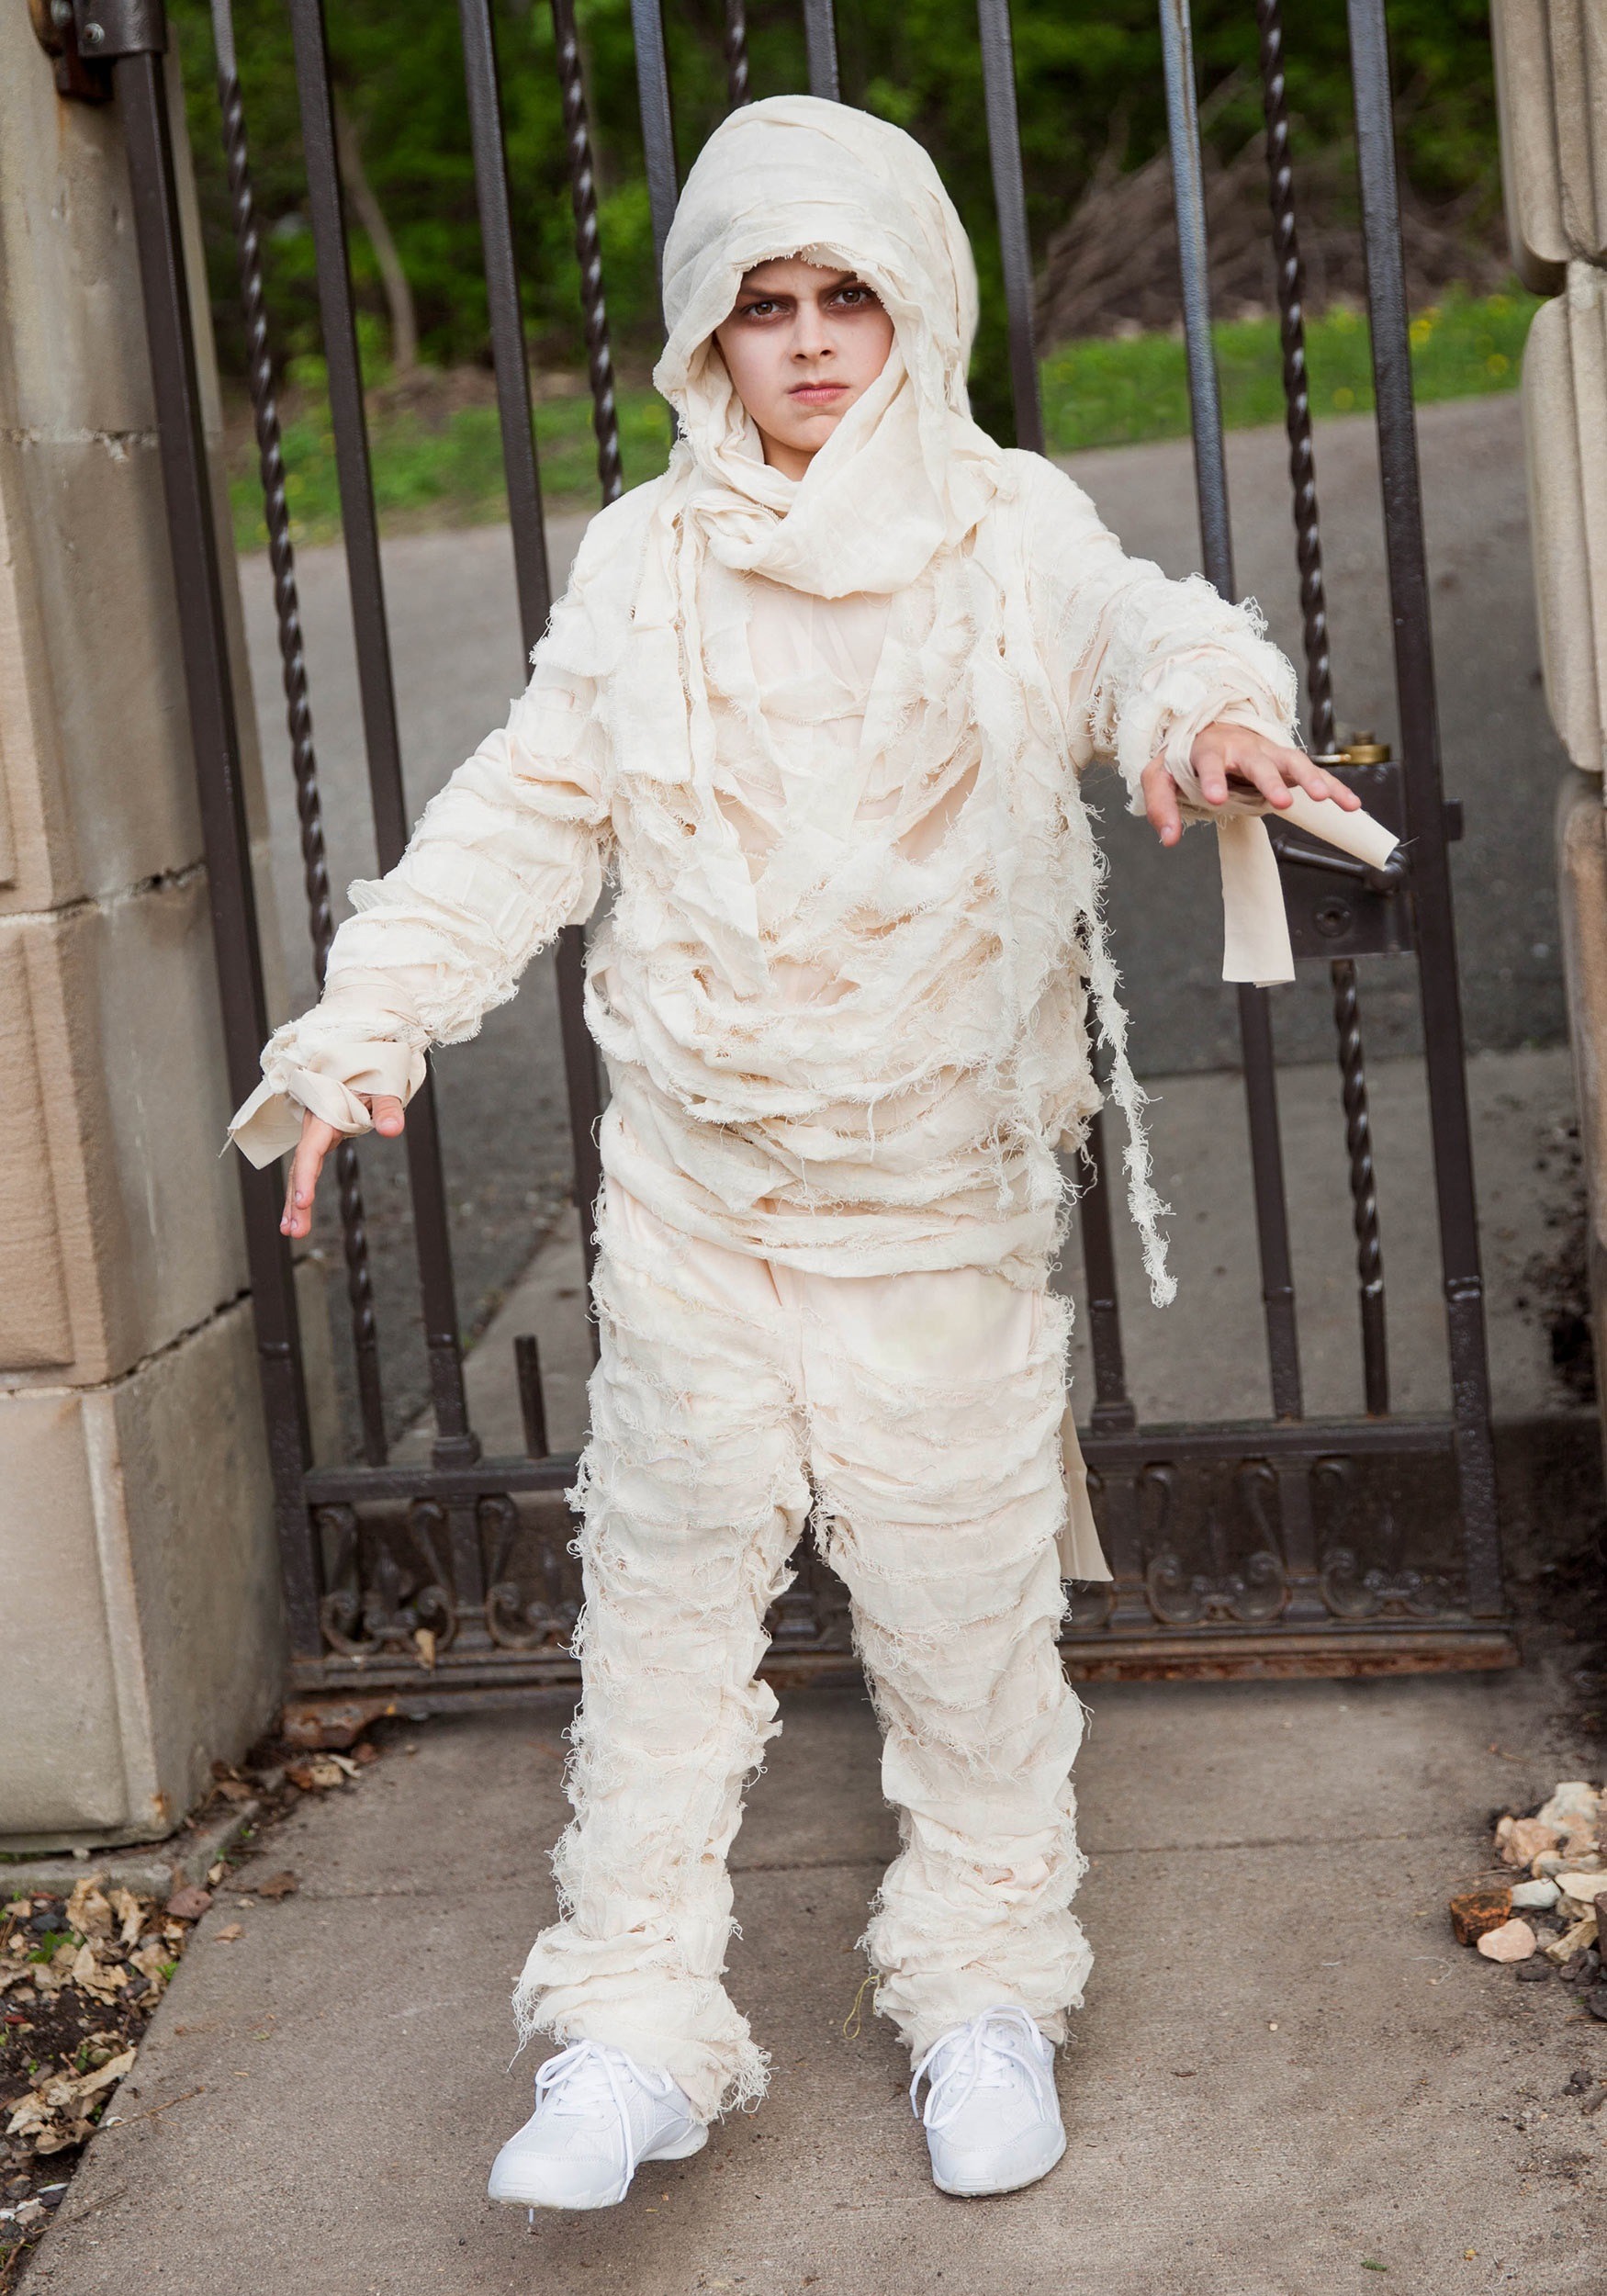 Mummy Costume For Boys , Original Halloween Costume